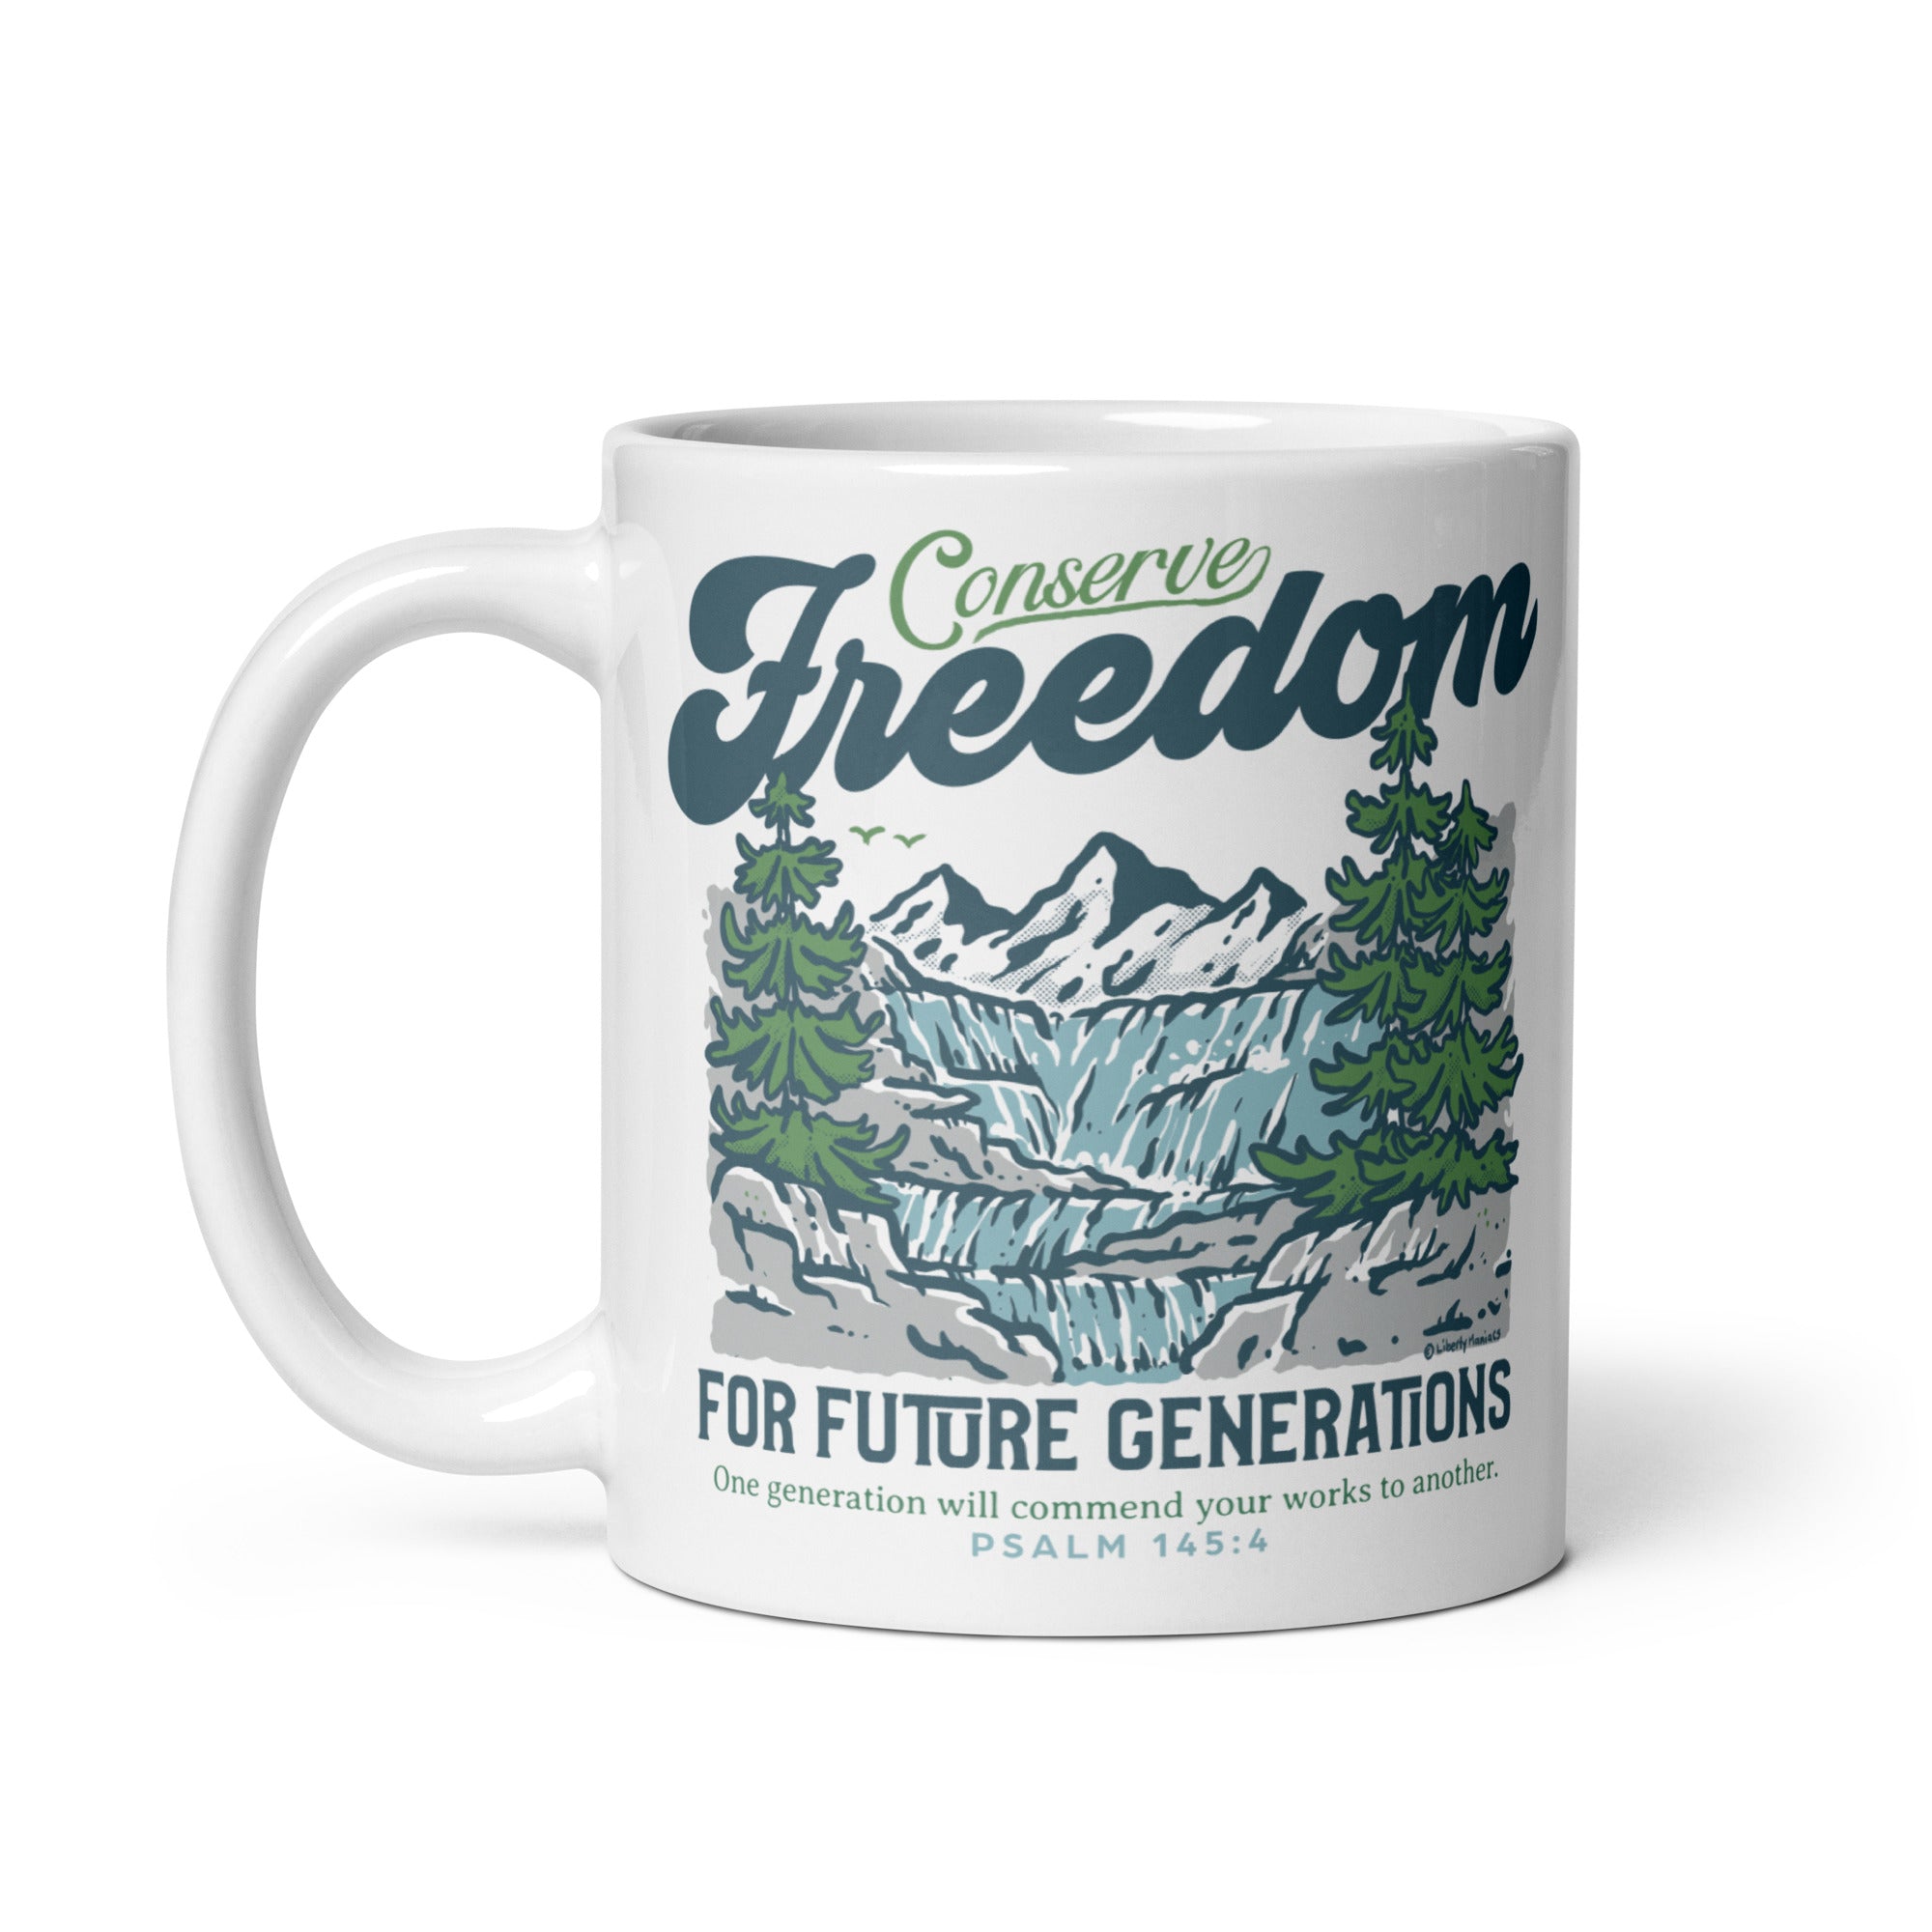 Conserve Freedom for Future Generations Mug